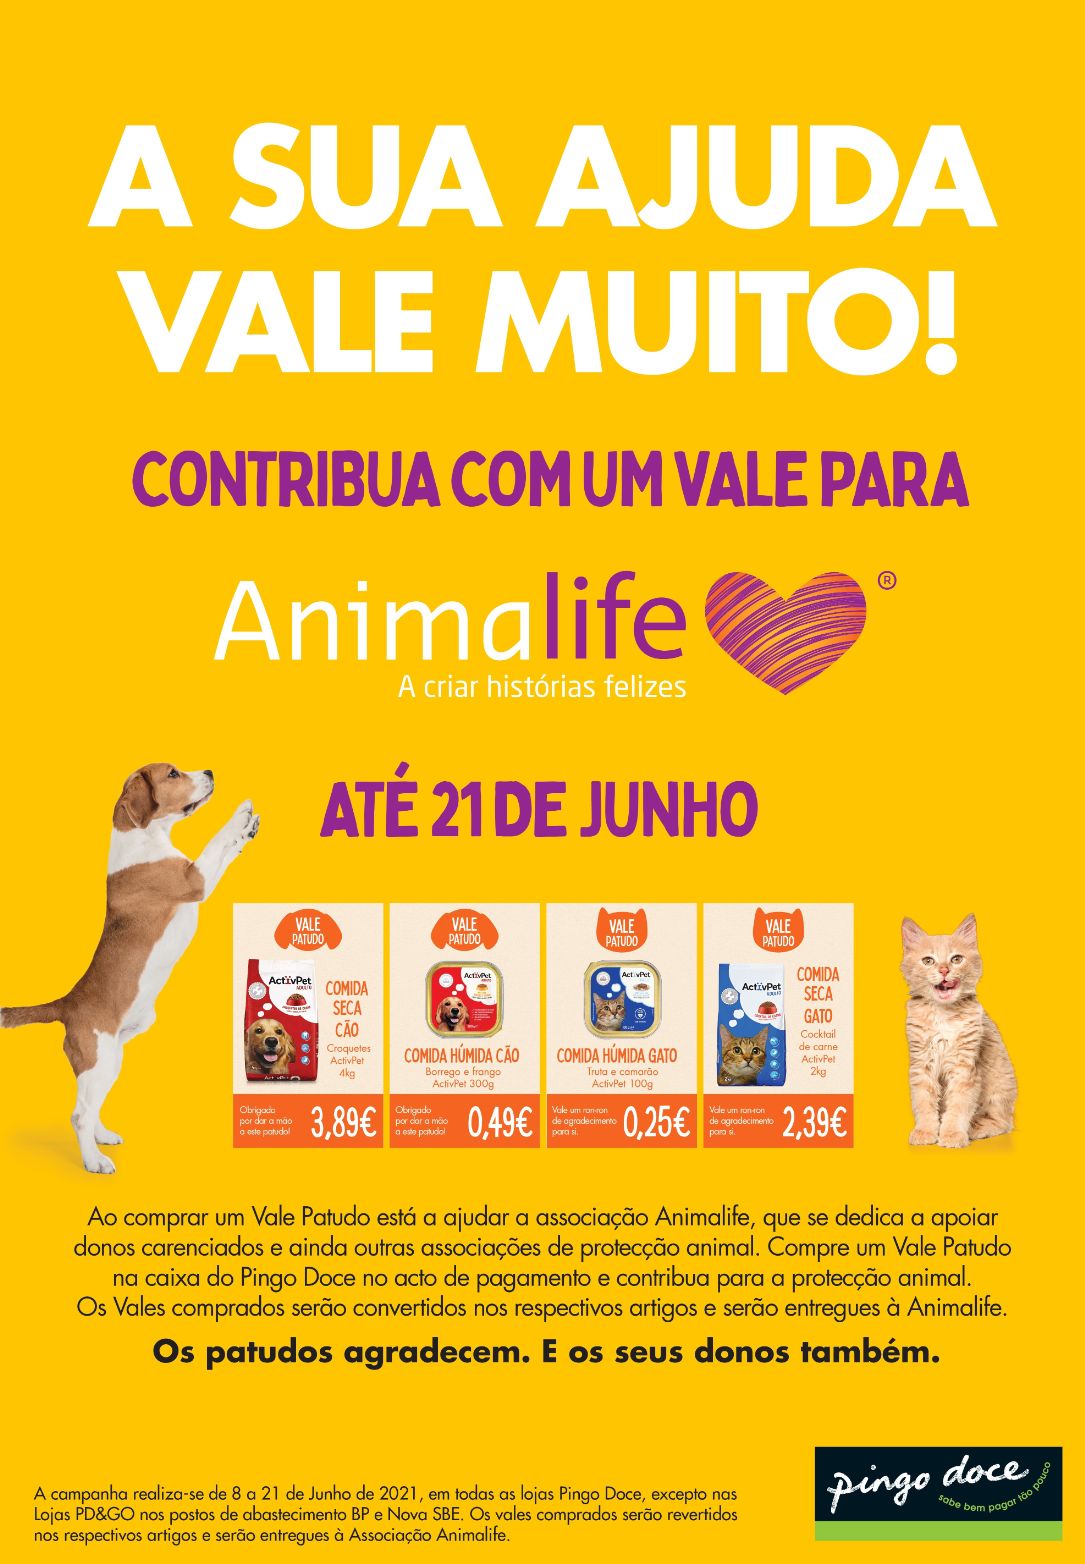 Animalife promove iniciativa “A sua ajuda vale muito!”